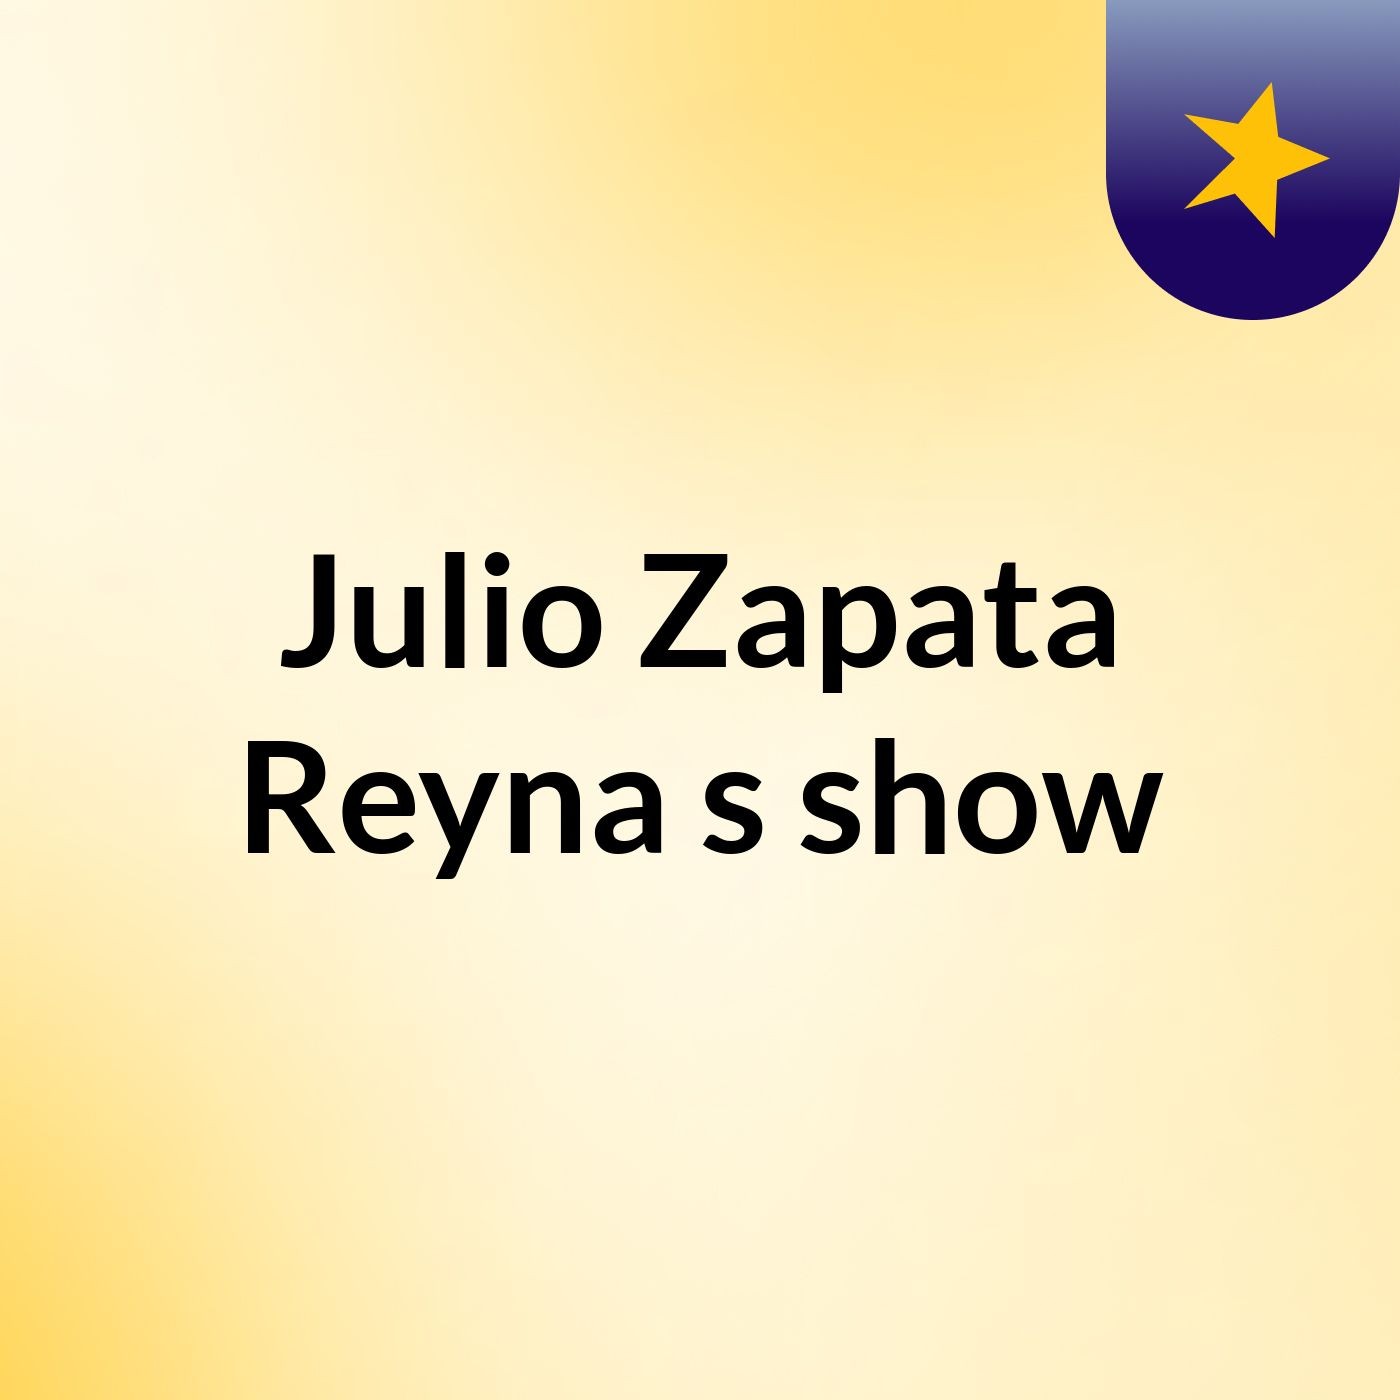 Julio Zapata Reyna's show